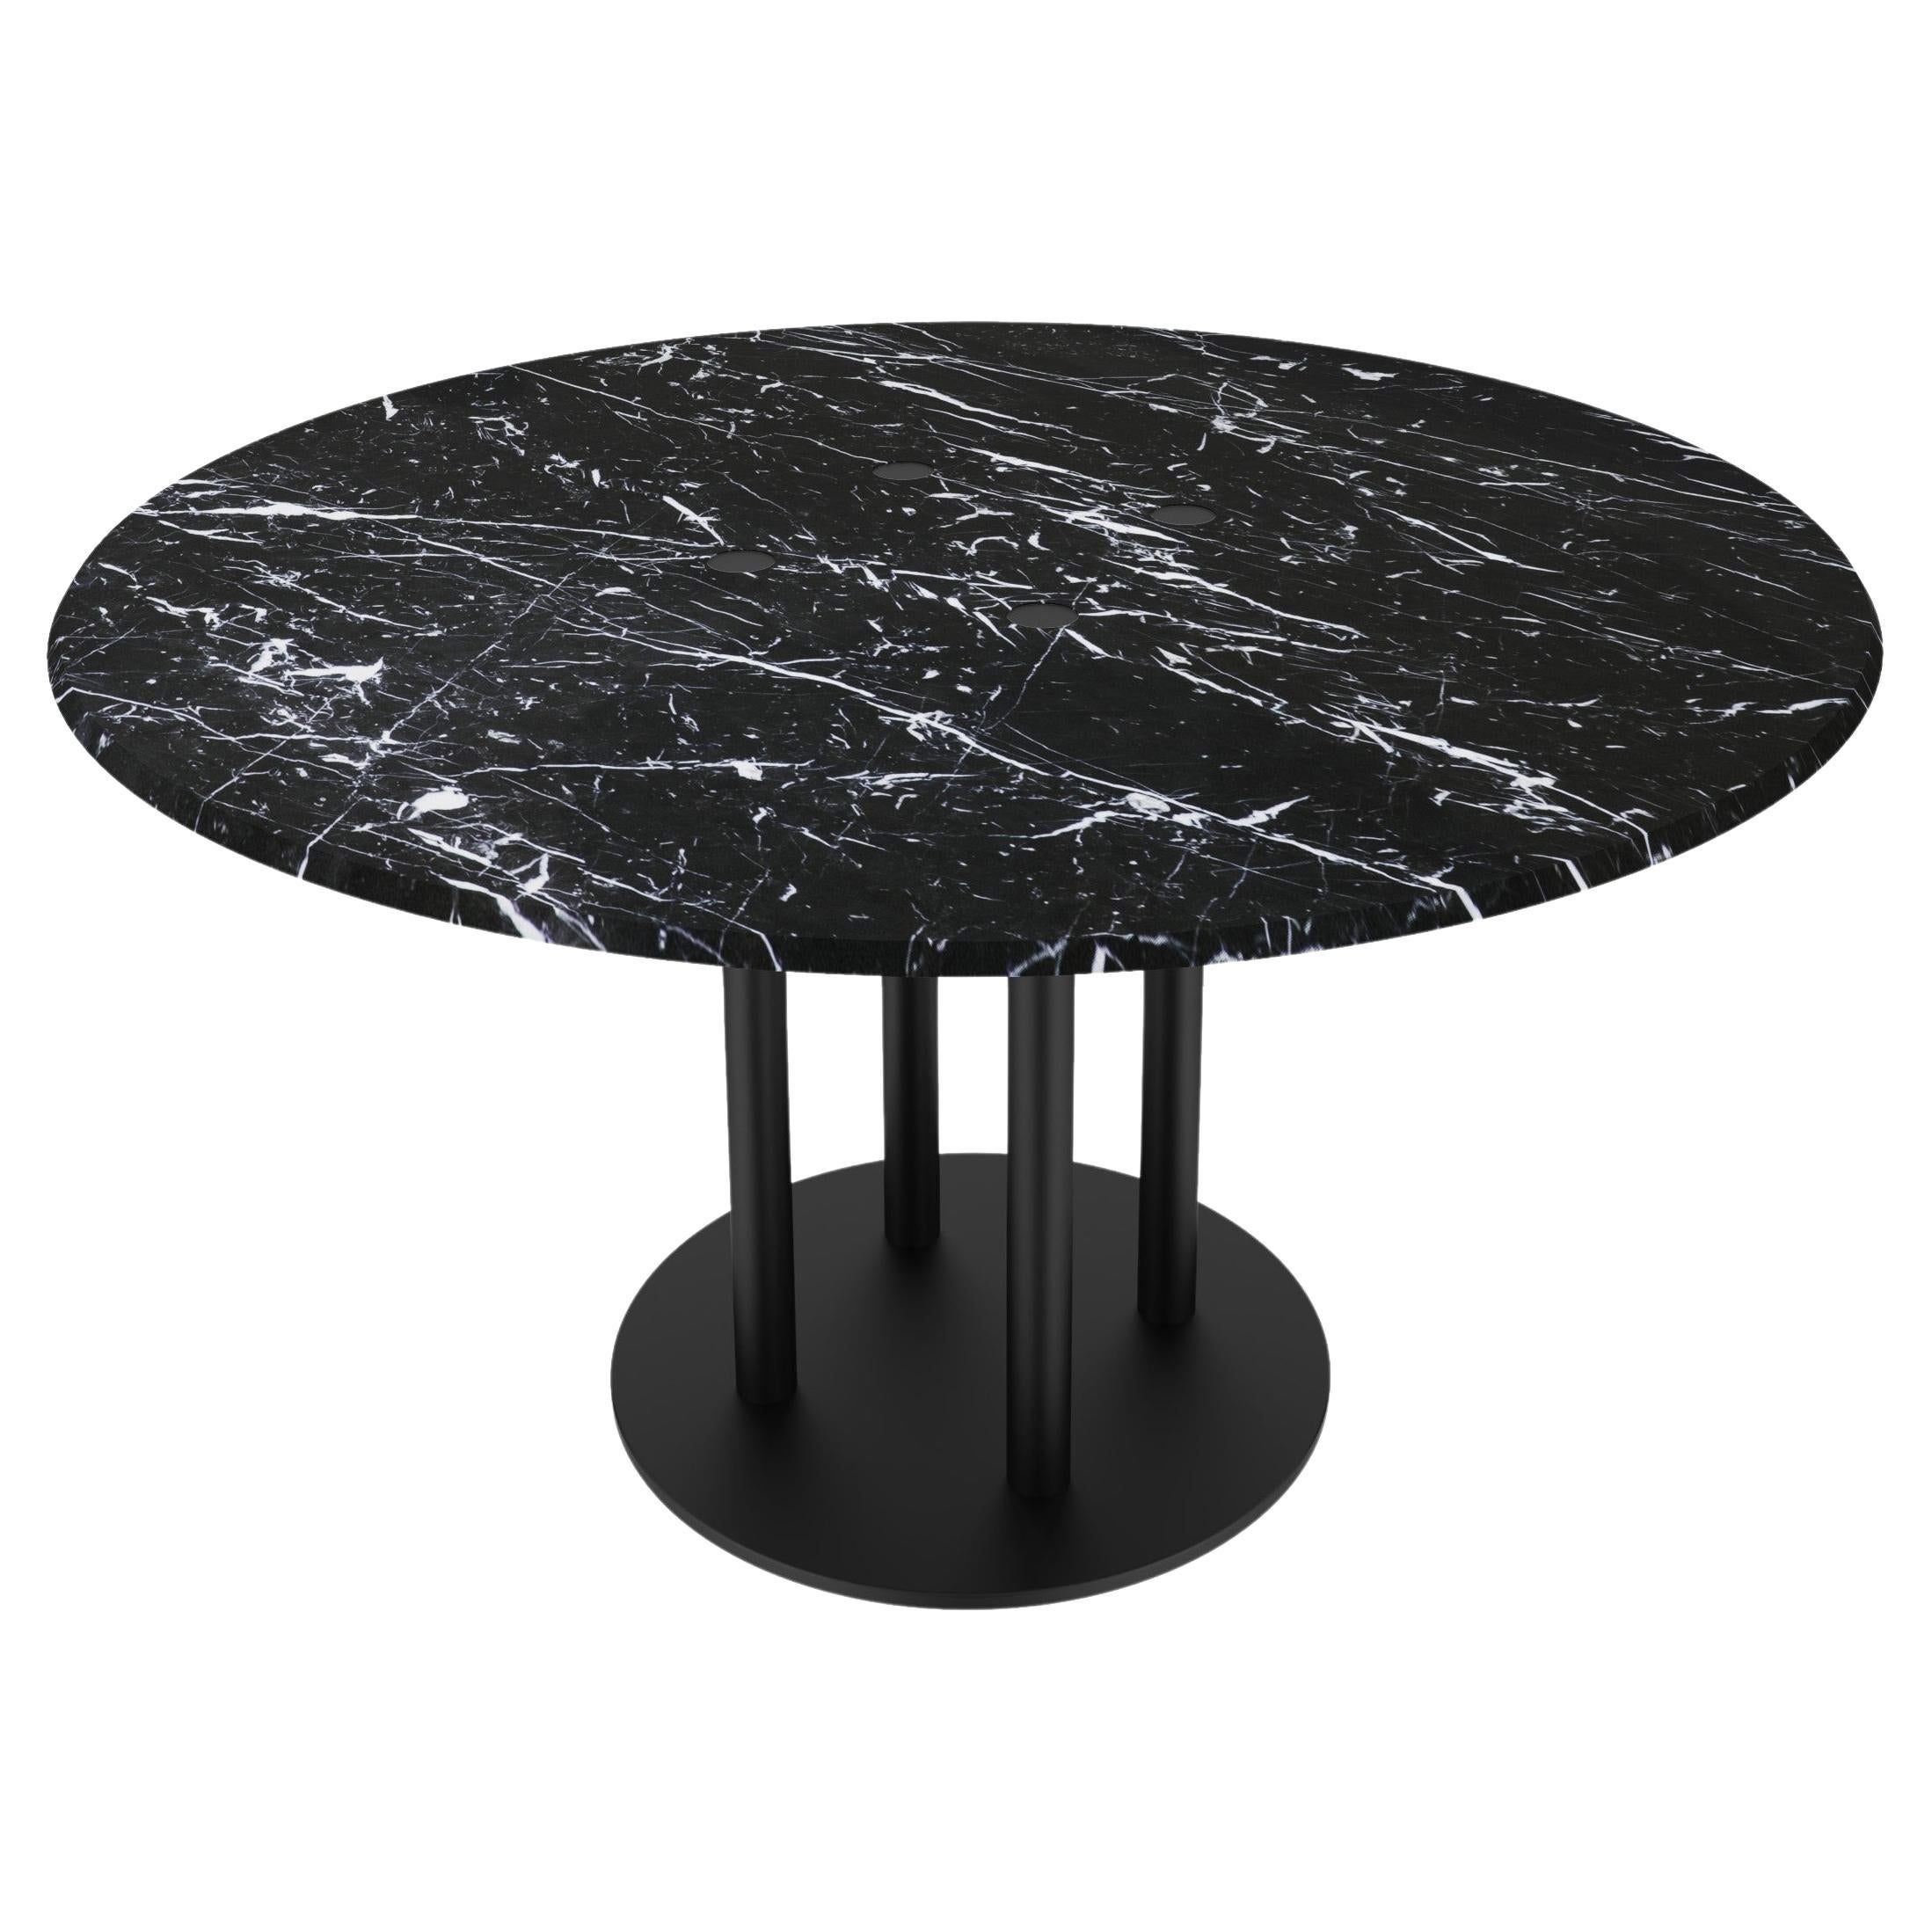  NORDST Lot Dining Table, Italian Black Marble, Danish Modern Design, New For Sale